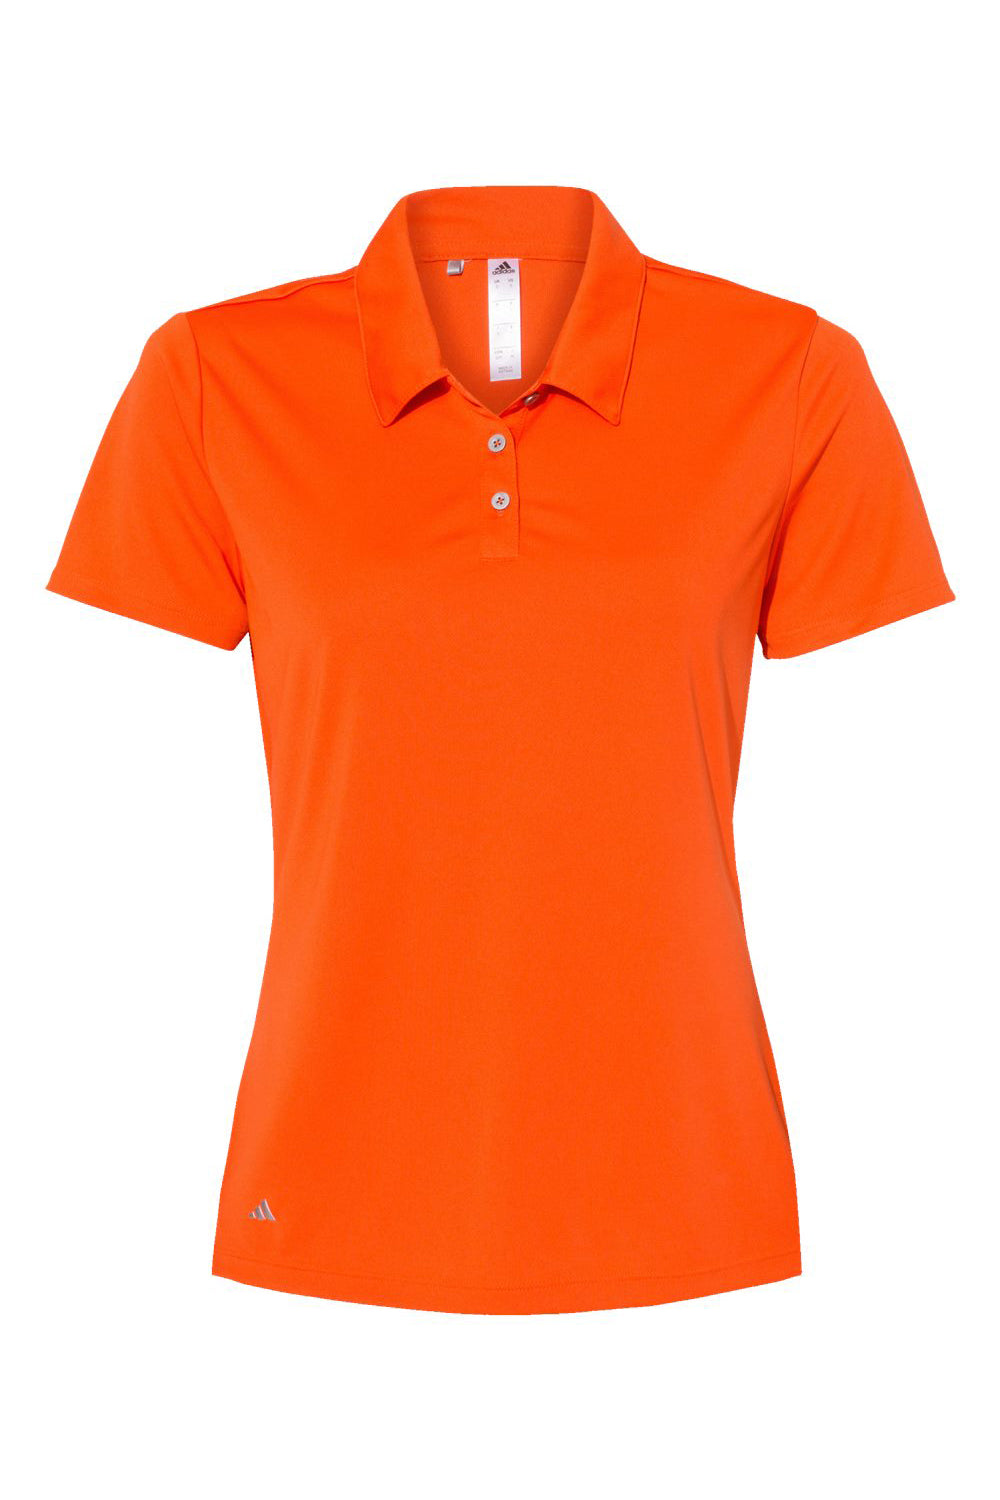 Adidas A231 Womens Performance UPF 50+ Short Sleeve Polo Shirt Orange Flat Front